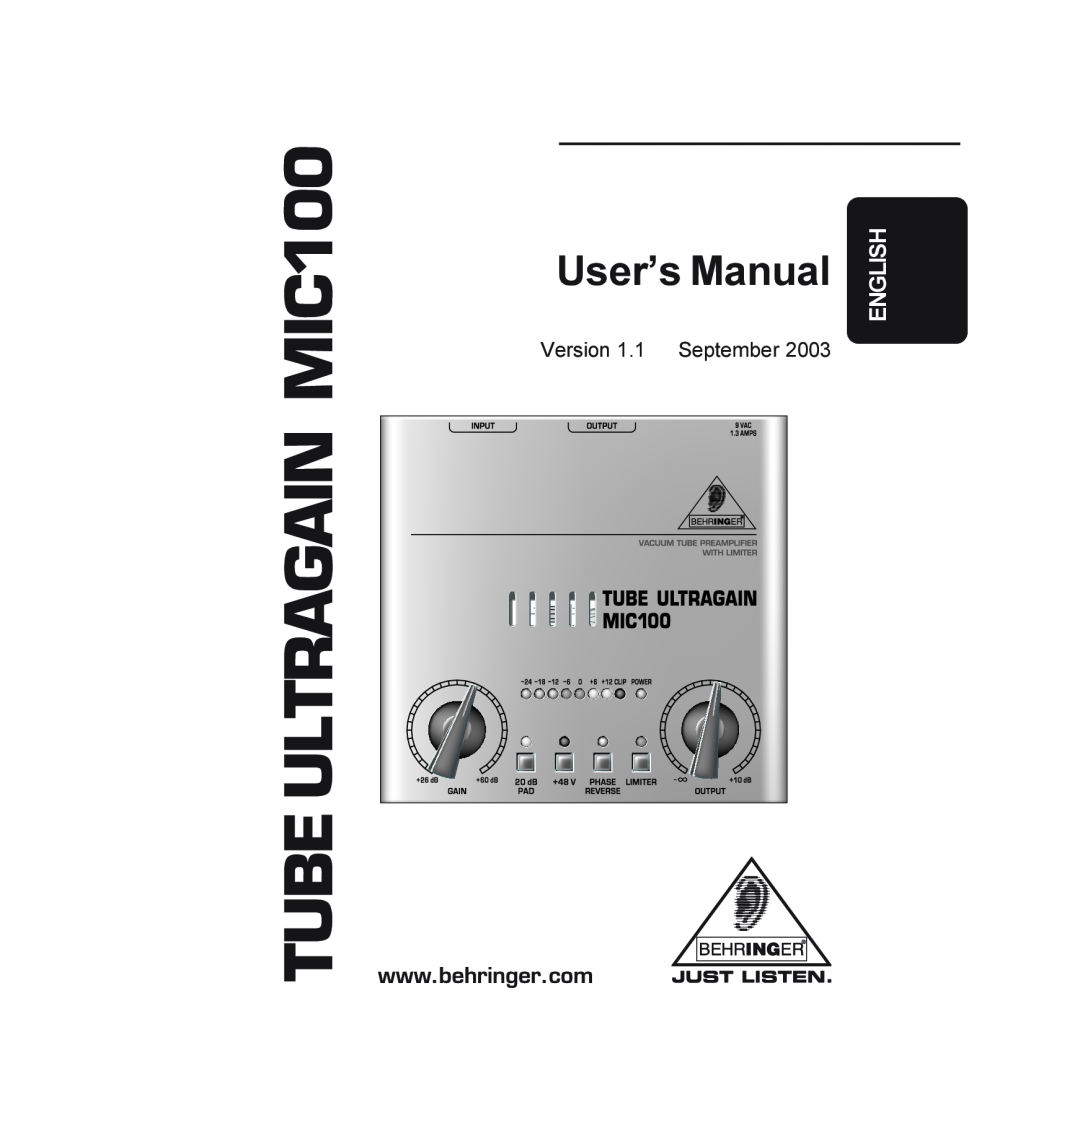 Behringer manual TUBE ULTRAGAIN MIC100, English, Version 1.1 September 